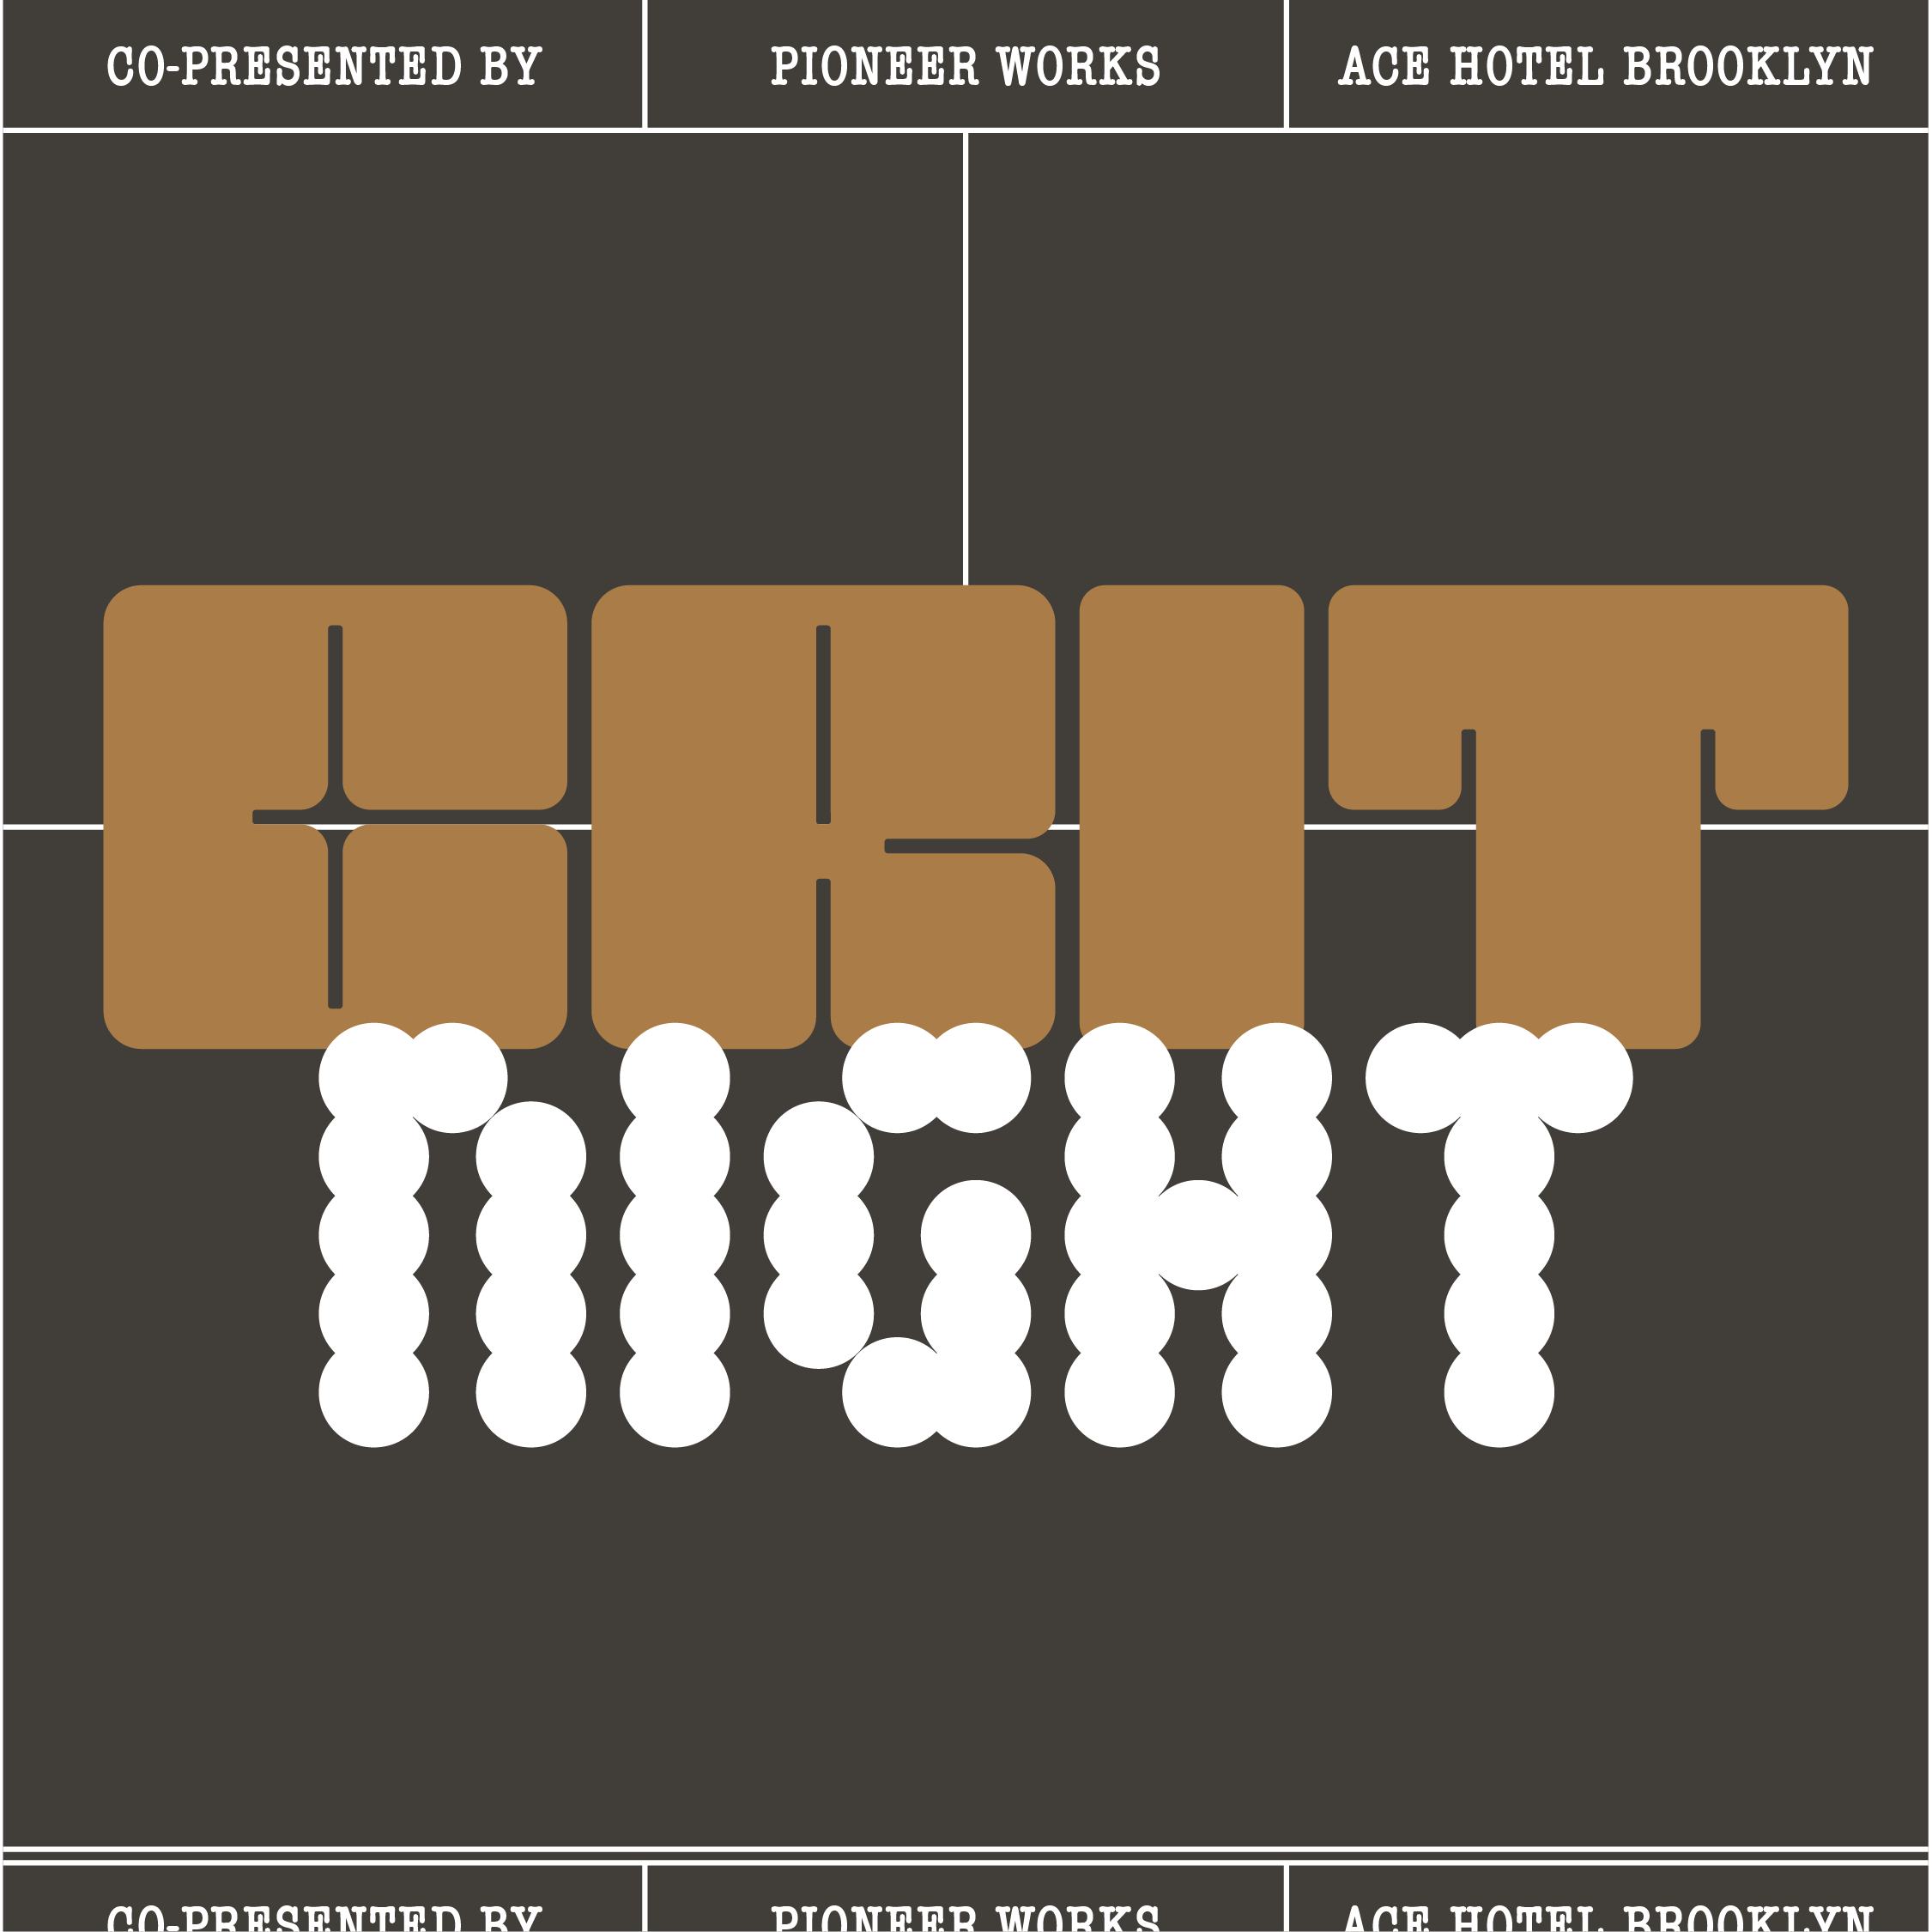 Crit Night promo flyer